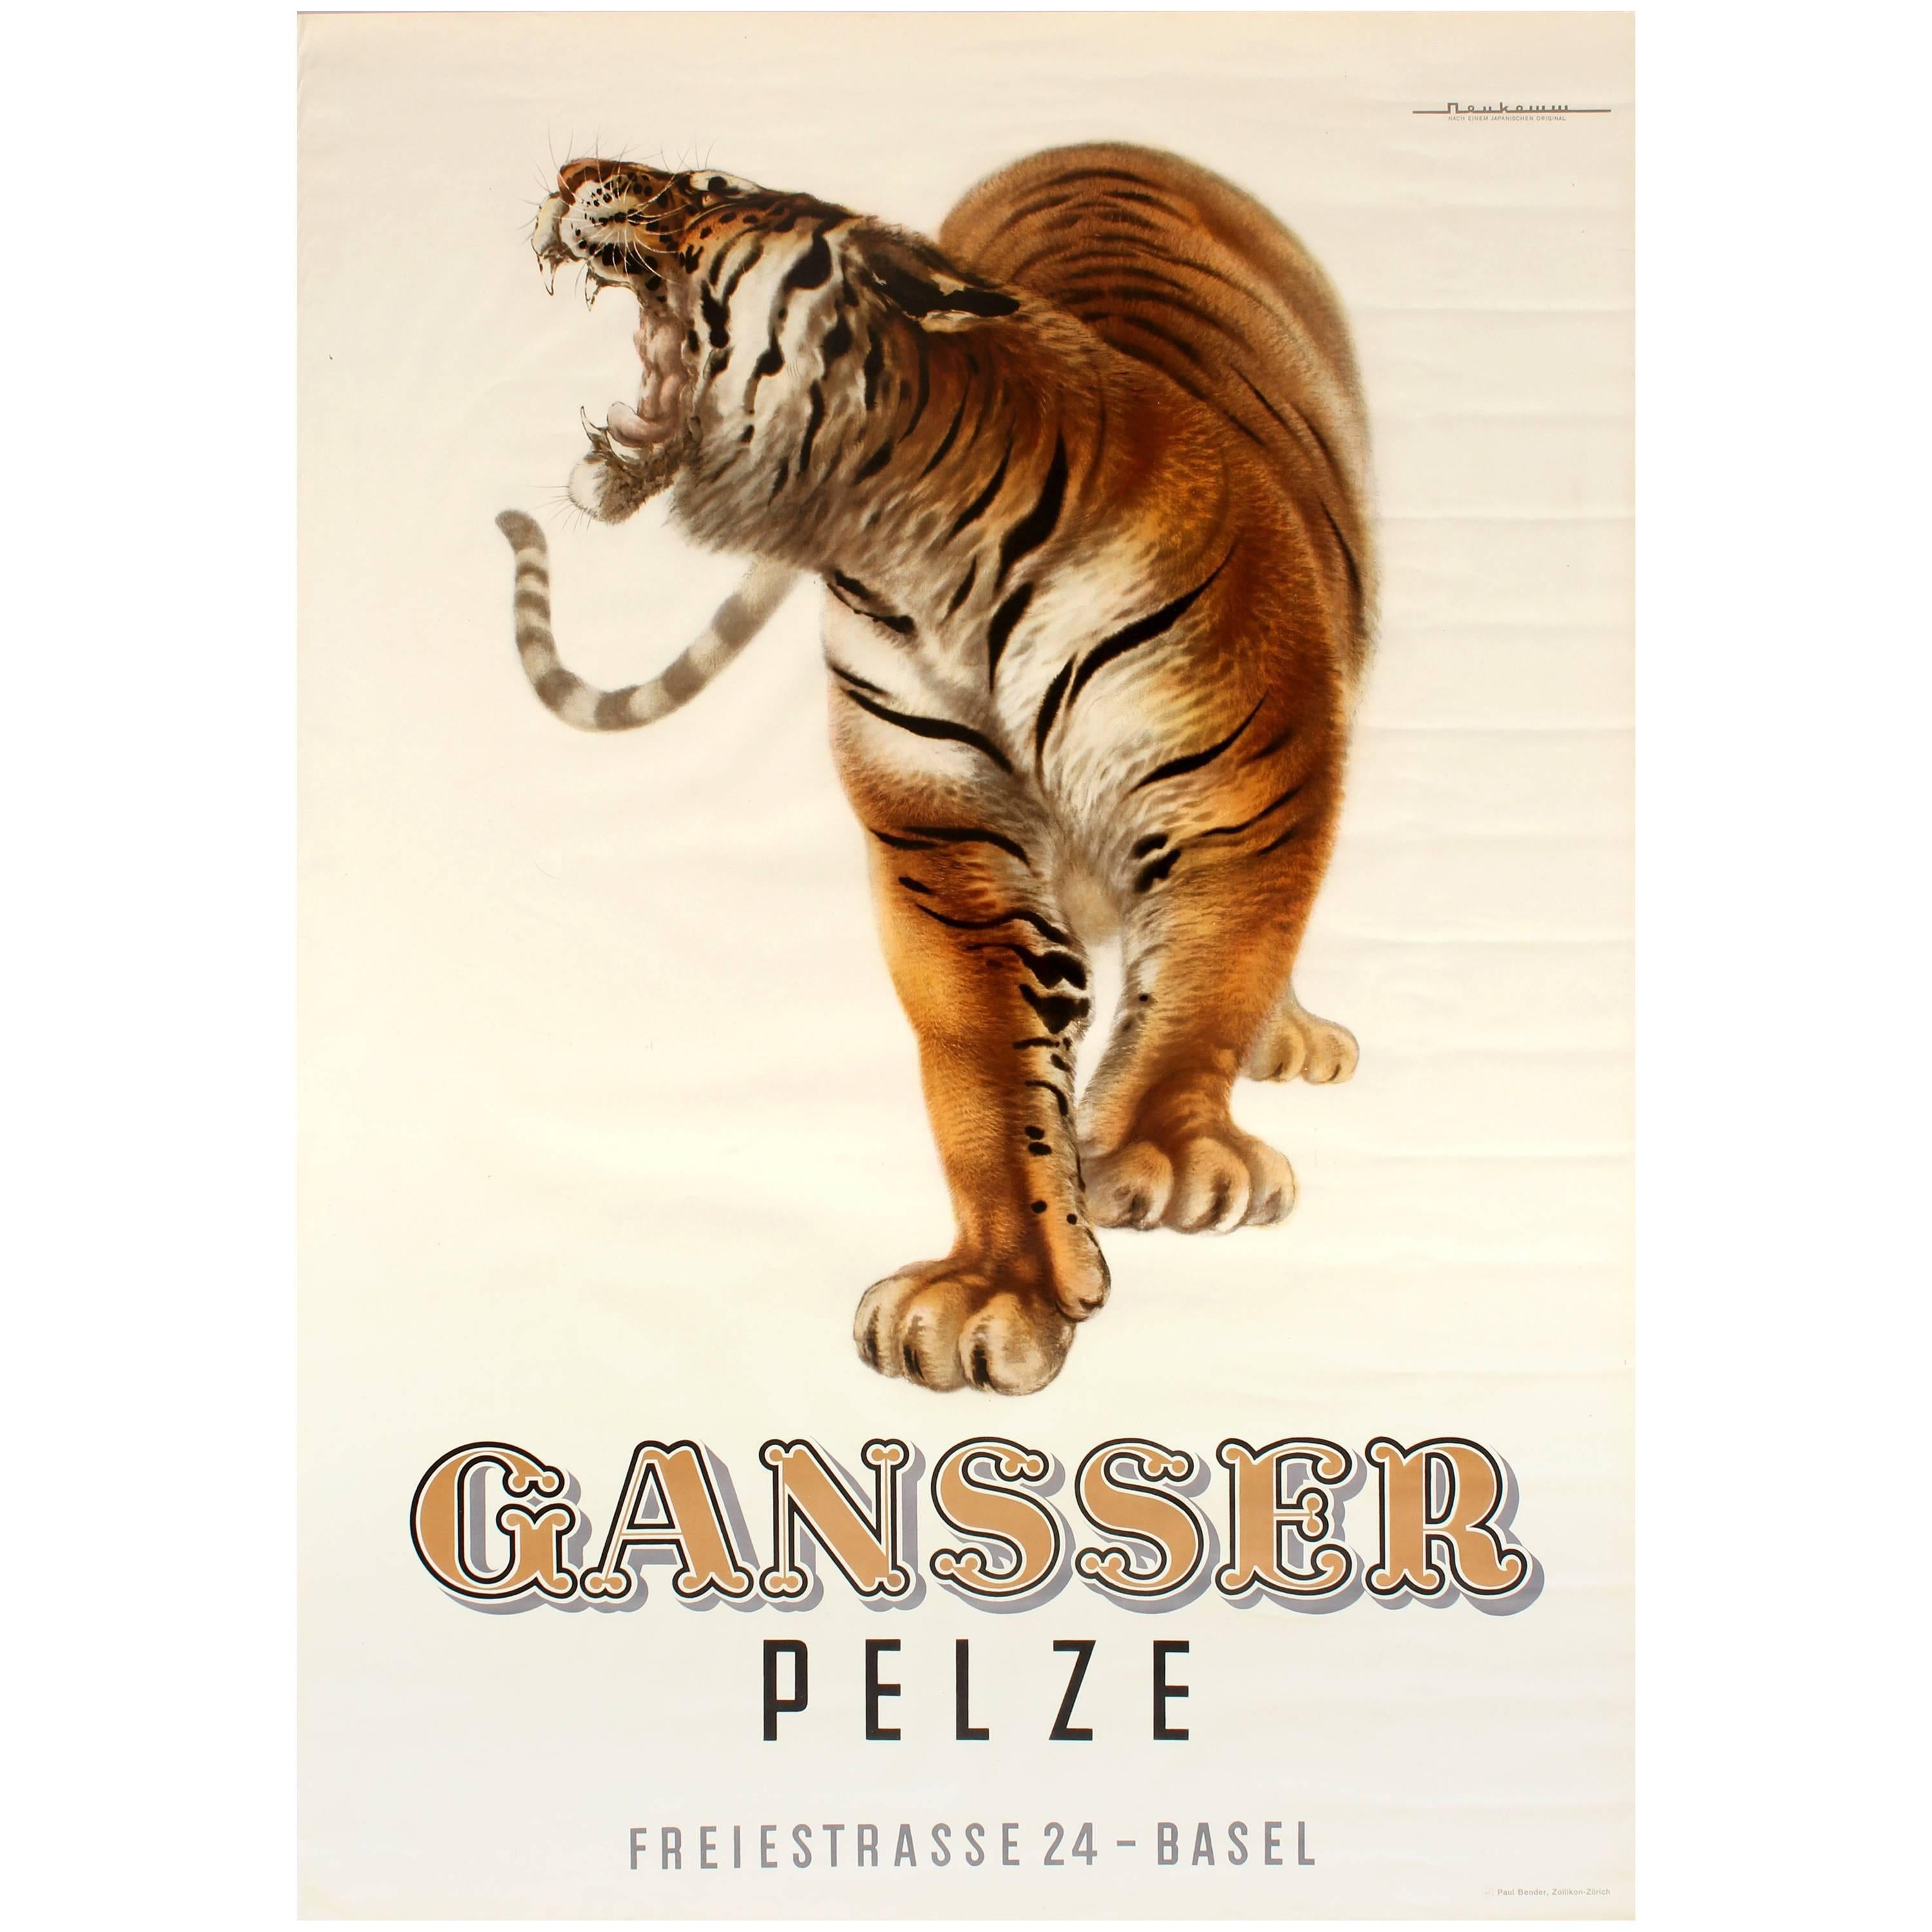 Original Vintage Swiss Advertising Poster For Gansser Pelze Featuring a Tiger